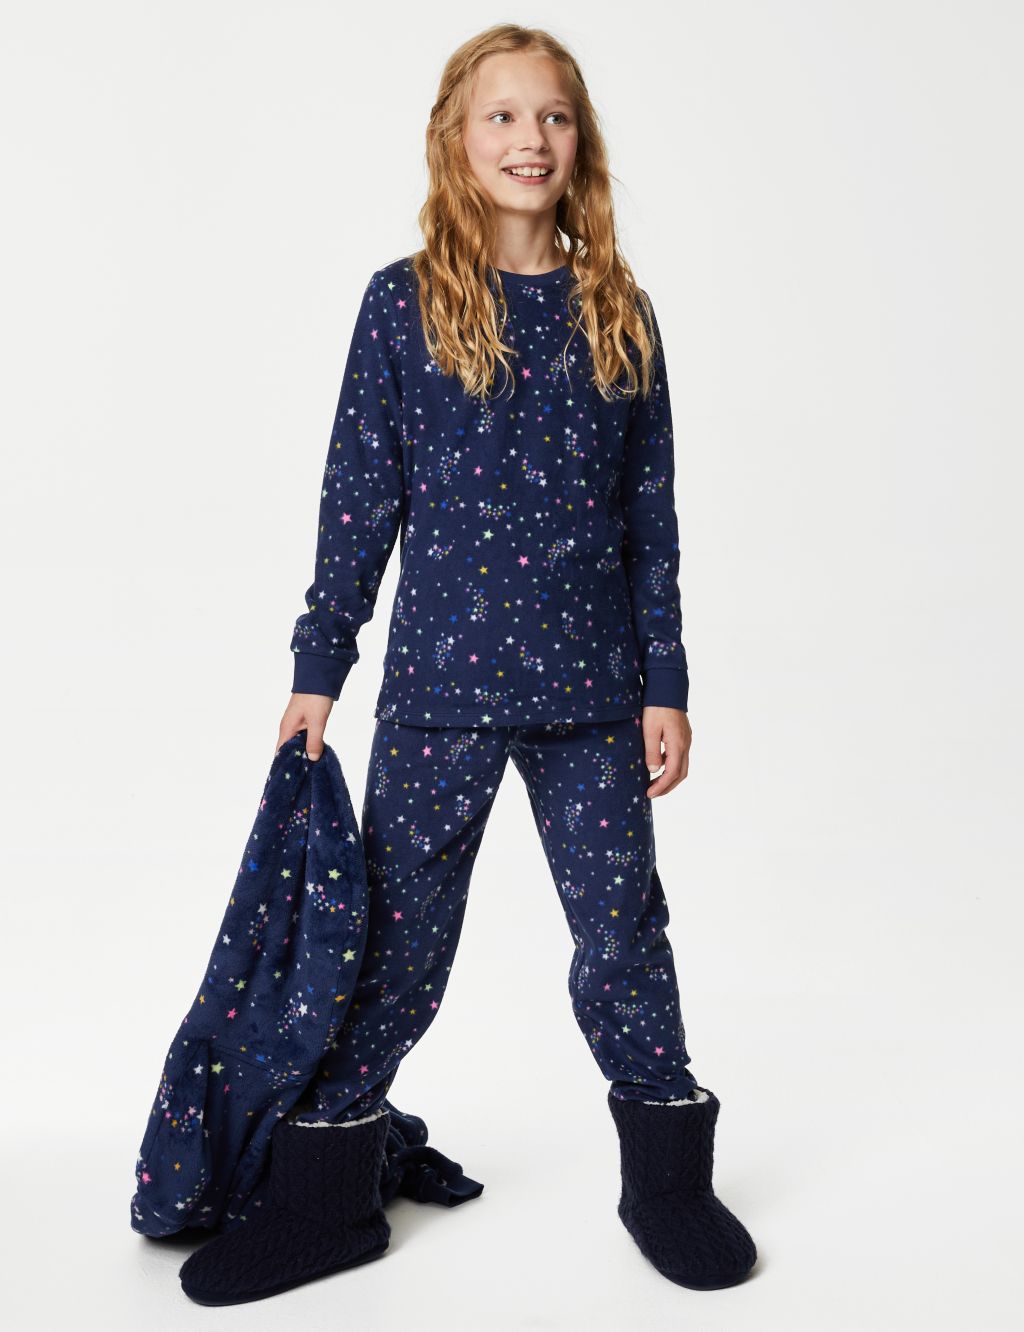 Little Girls' Pajamas & Sleepwear